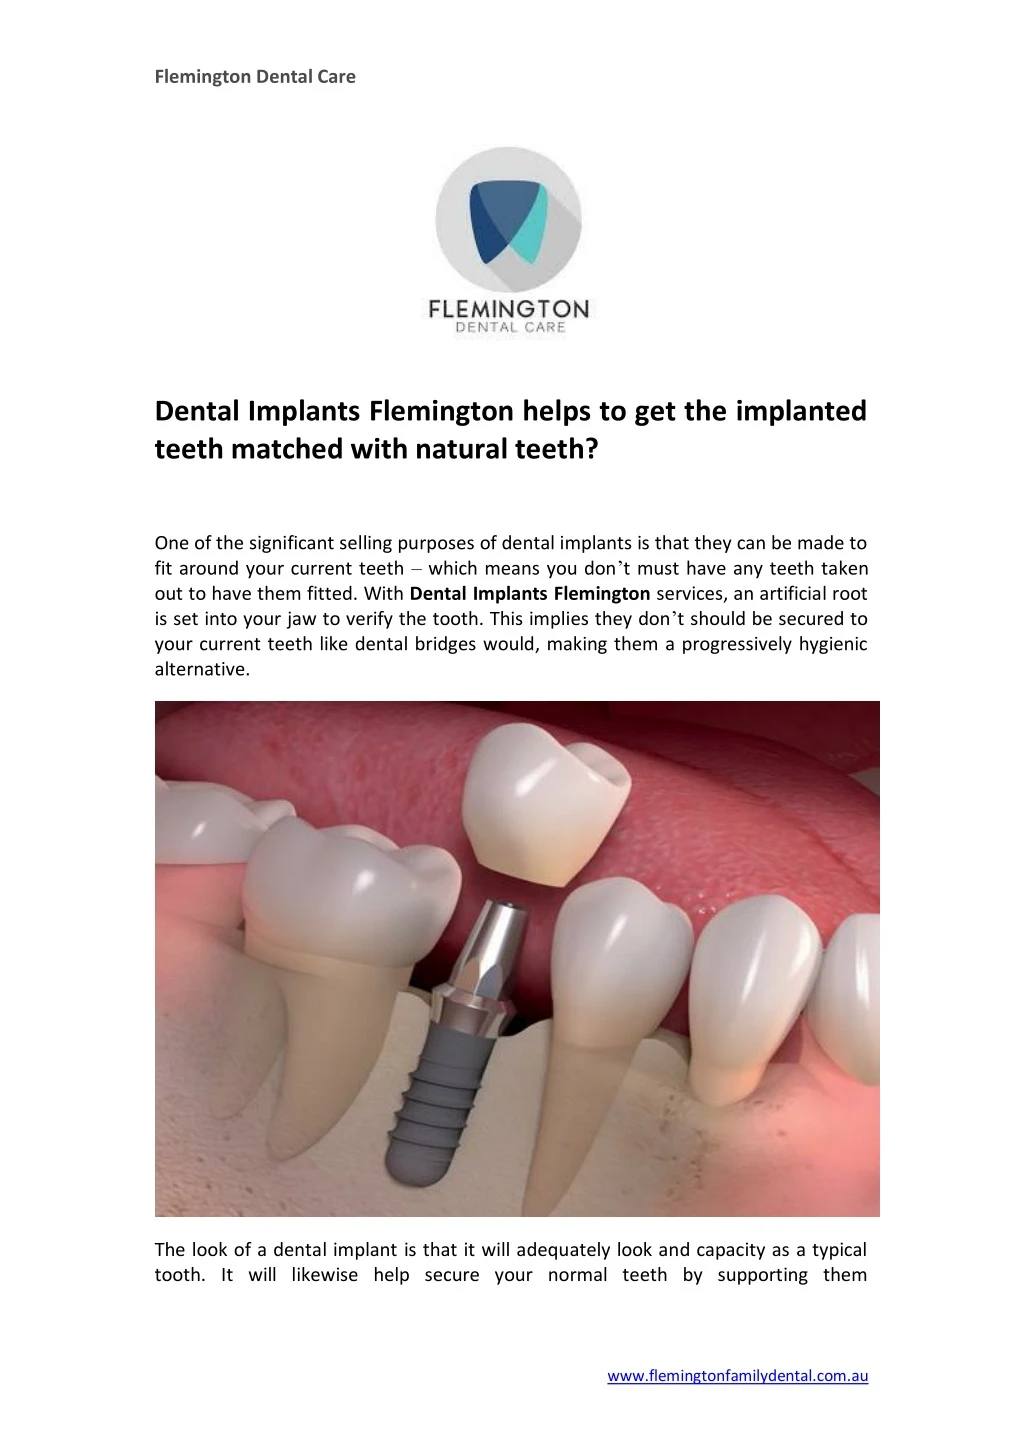 flemington dental care